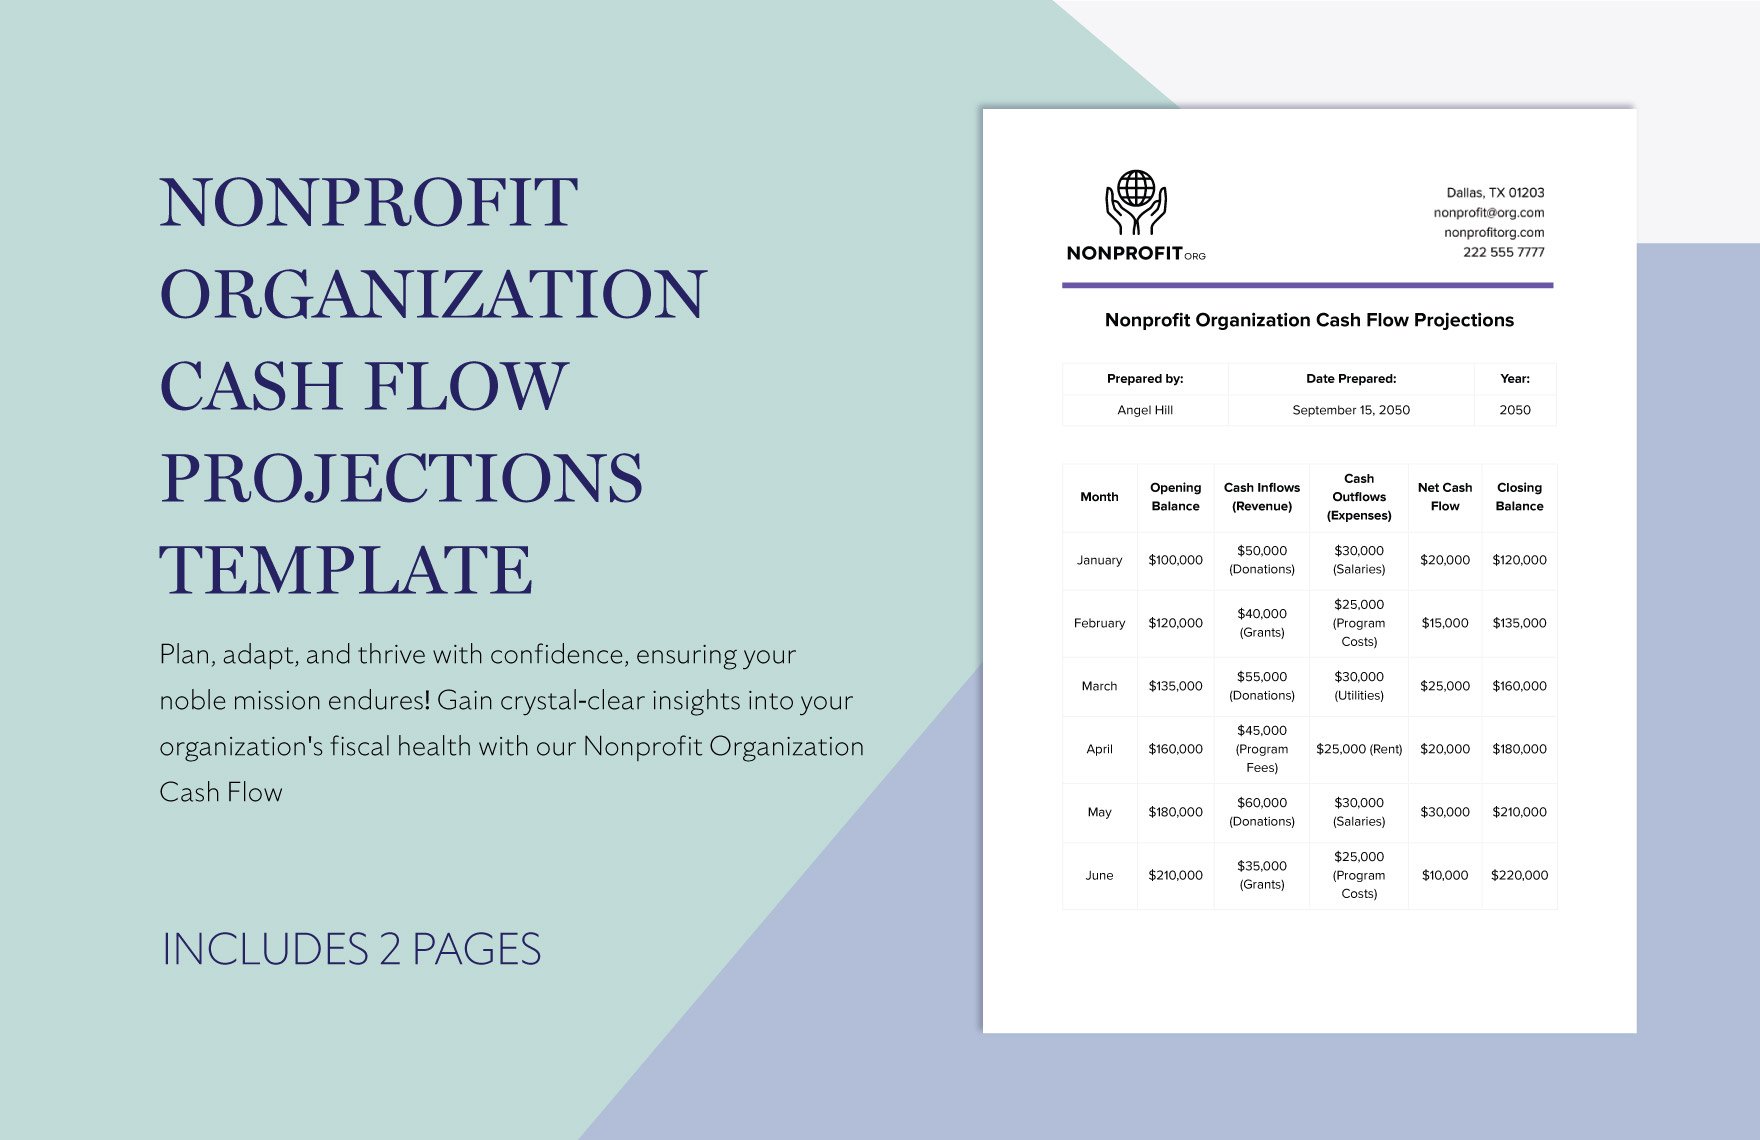 Nonprofit Organization Cash Flow Projections Template in Word, Google Docs, PDF